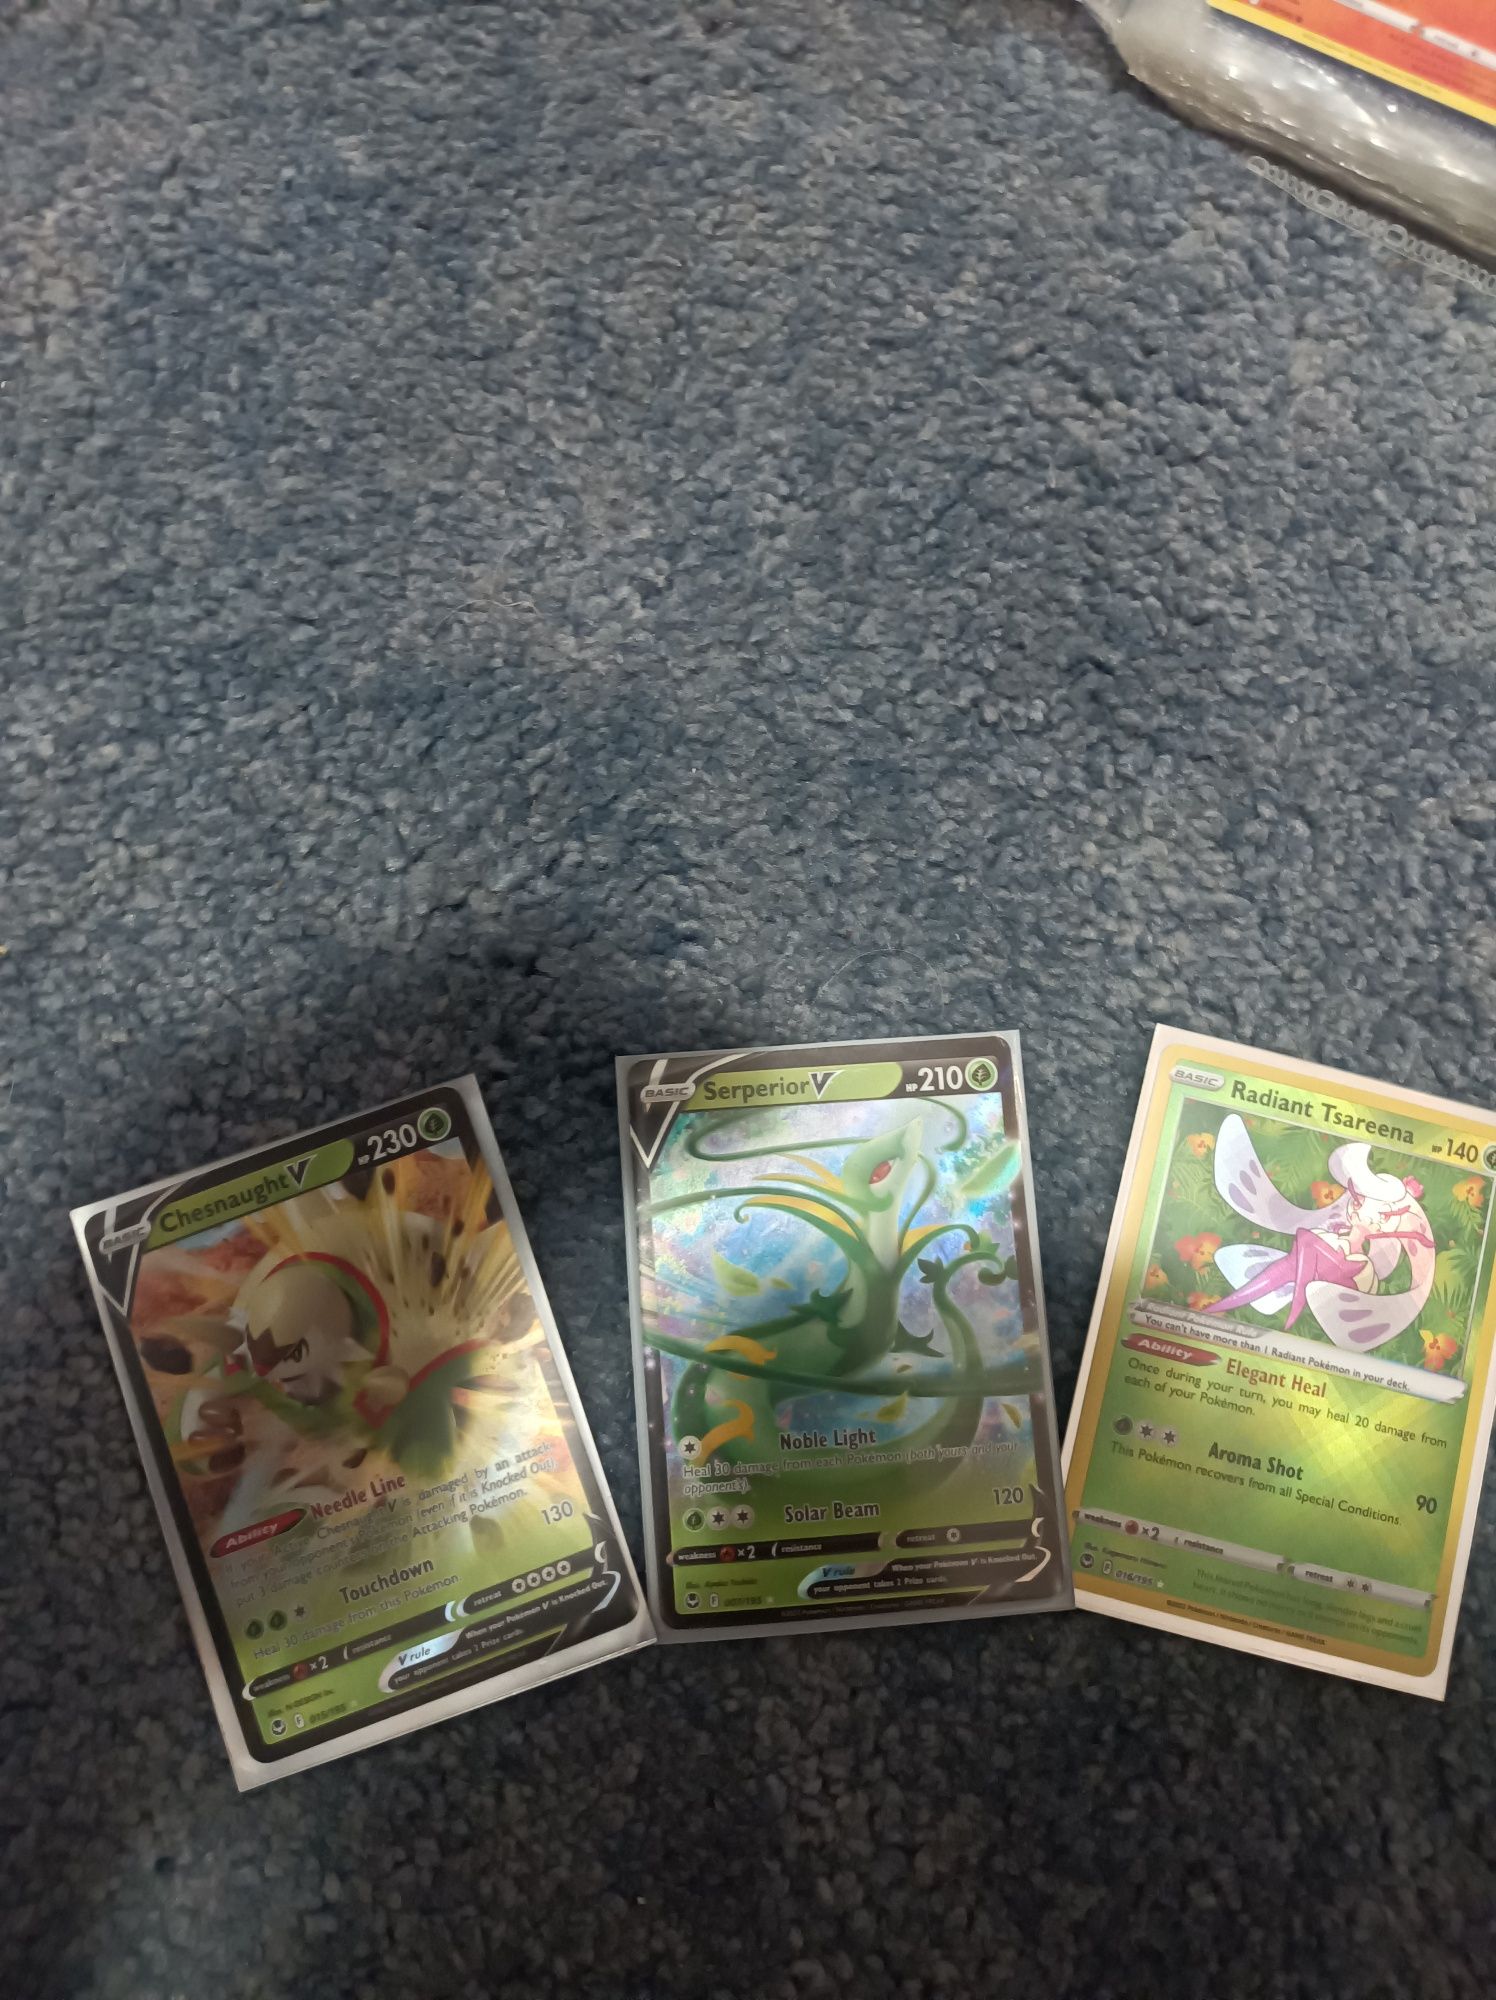 Karty pokemon Chesnauhght V, Serprior V, radiant tserena